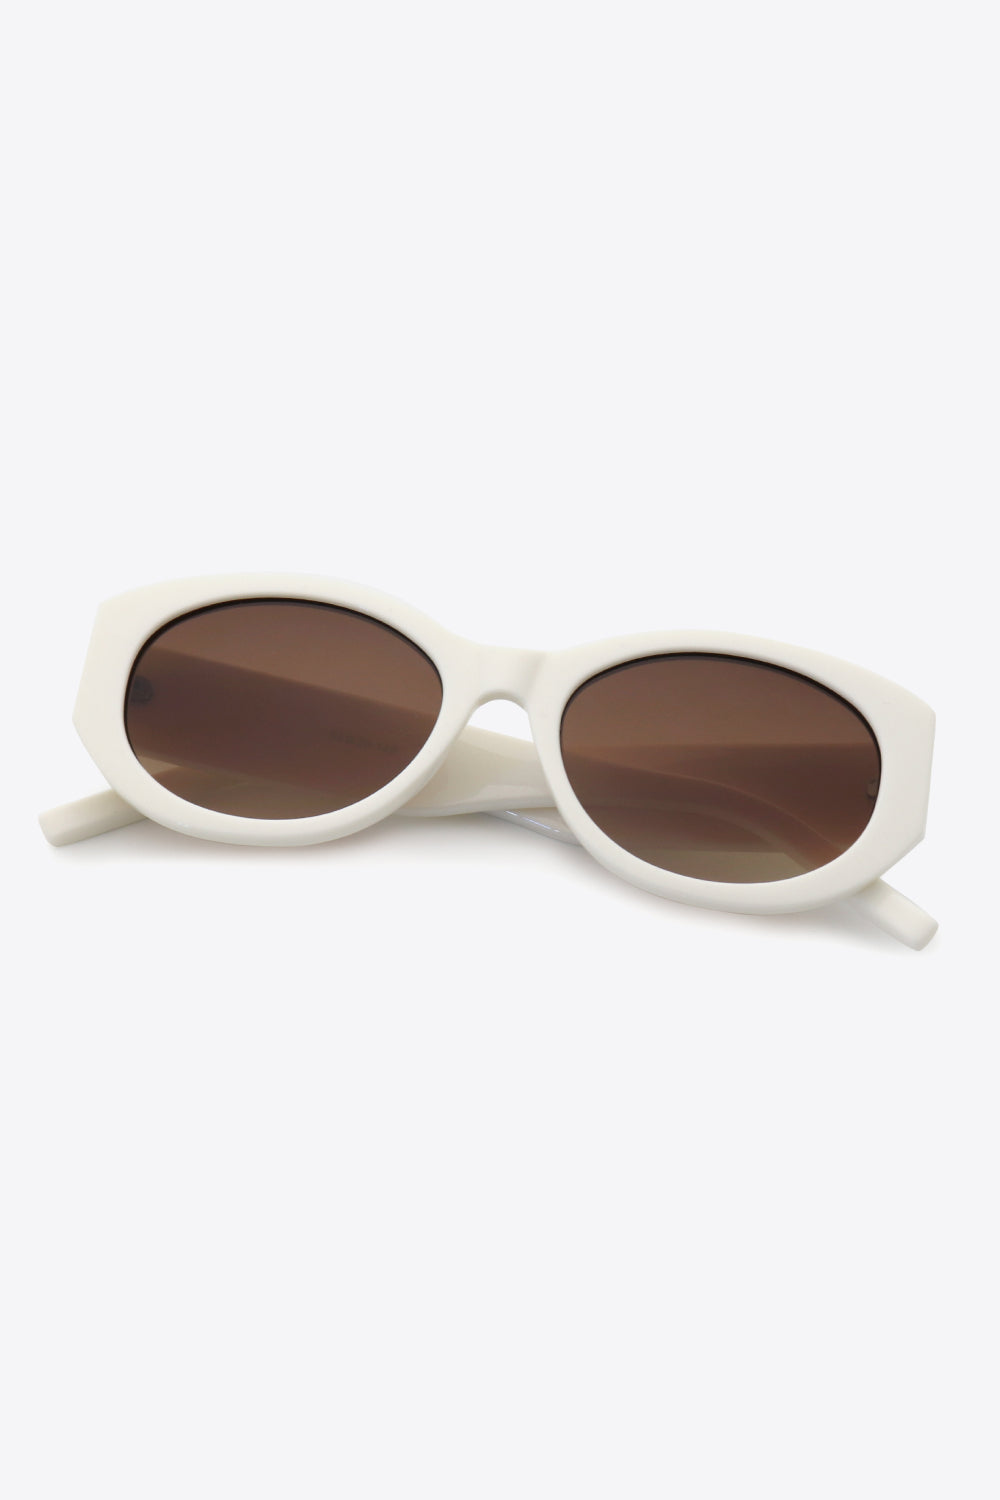 UV400 Polycarbonate Sunglasses - BEAUTY COSMOTICS SHOP